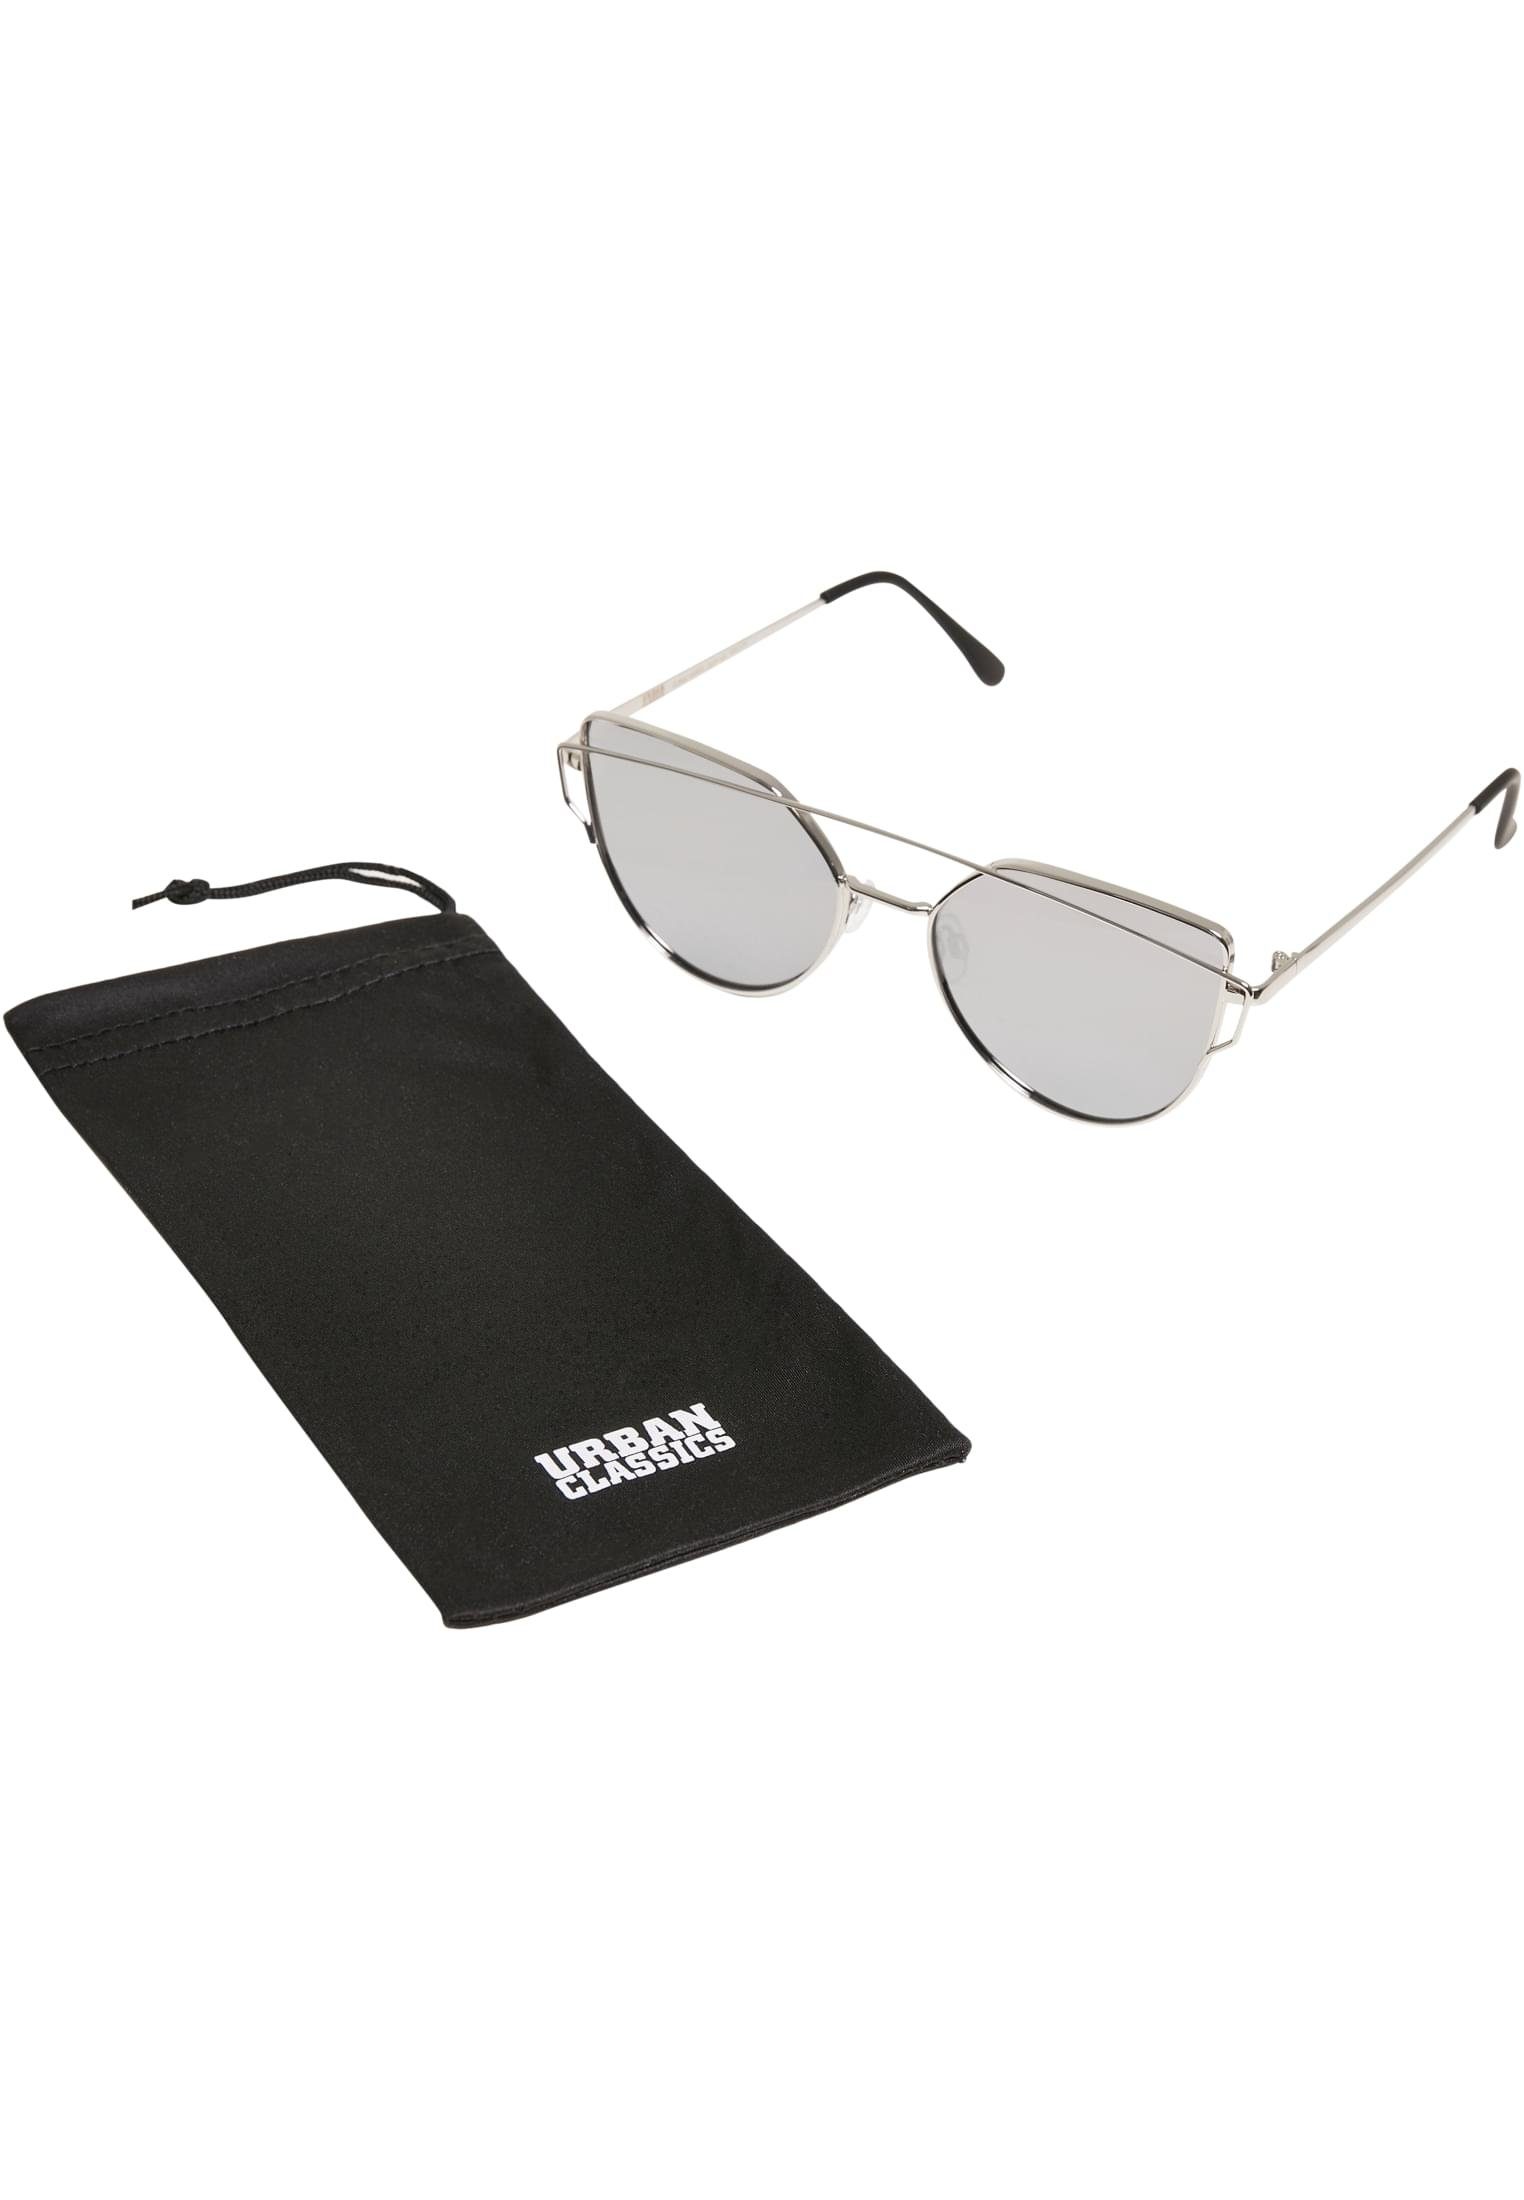 July Accessoires Sunglasses Sonnenbrille silver URBAN UC CLASSICS